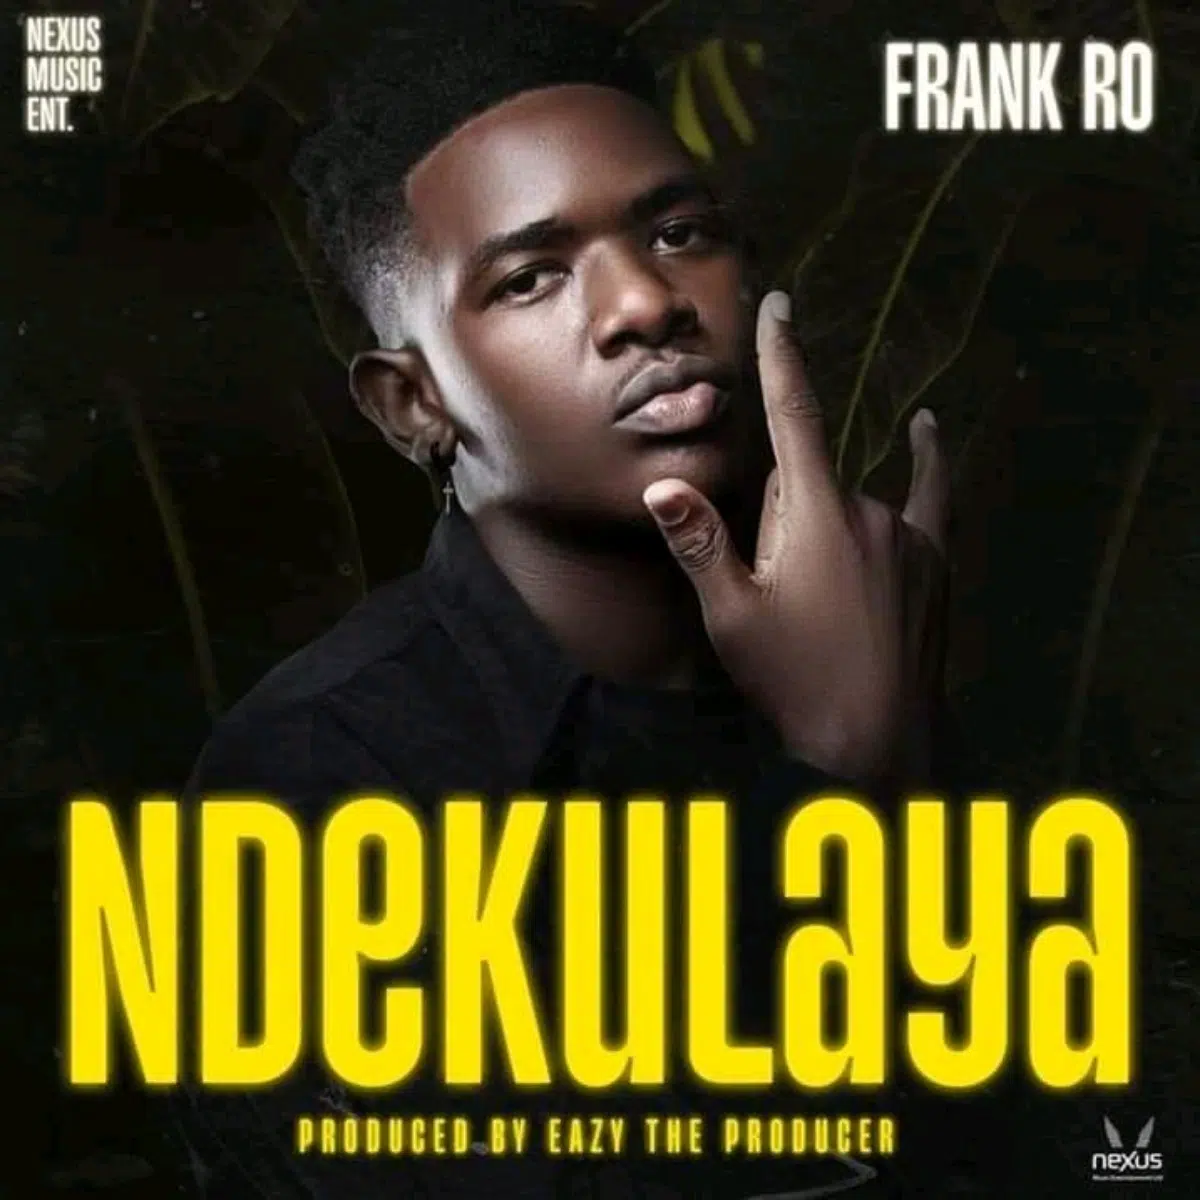 DOWNLOAD: Frank Ro – “Ndekulaya” Mp3